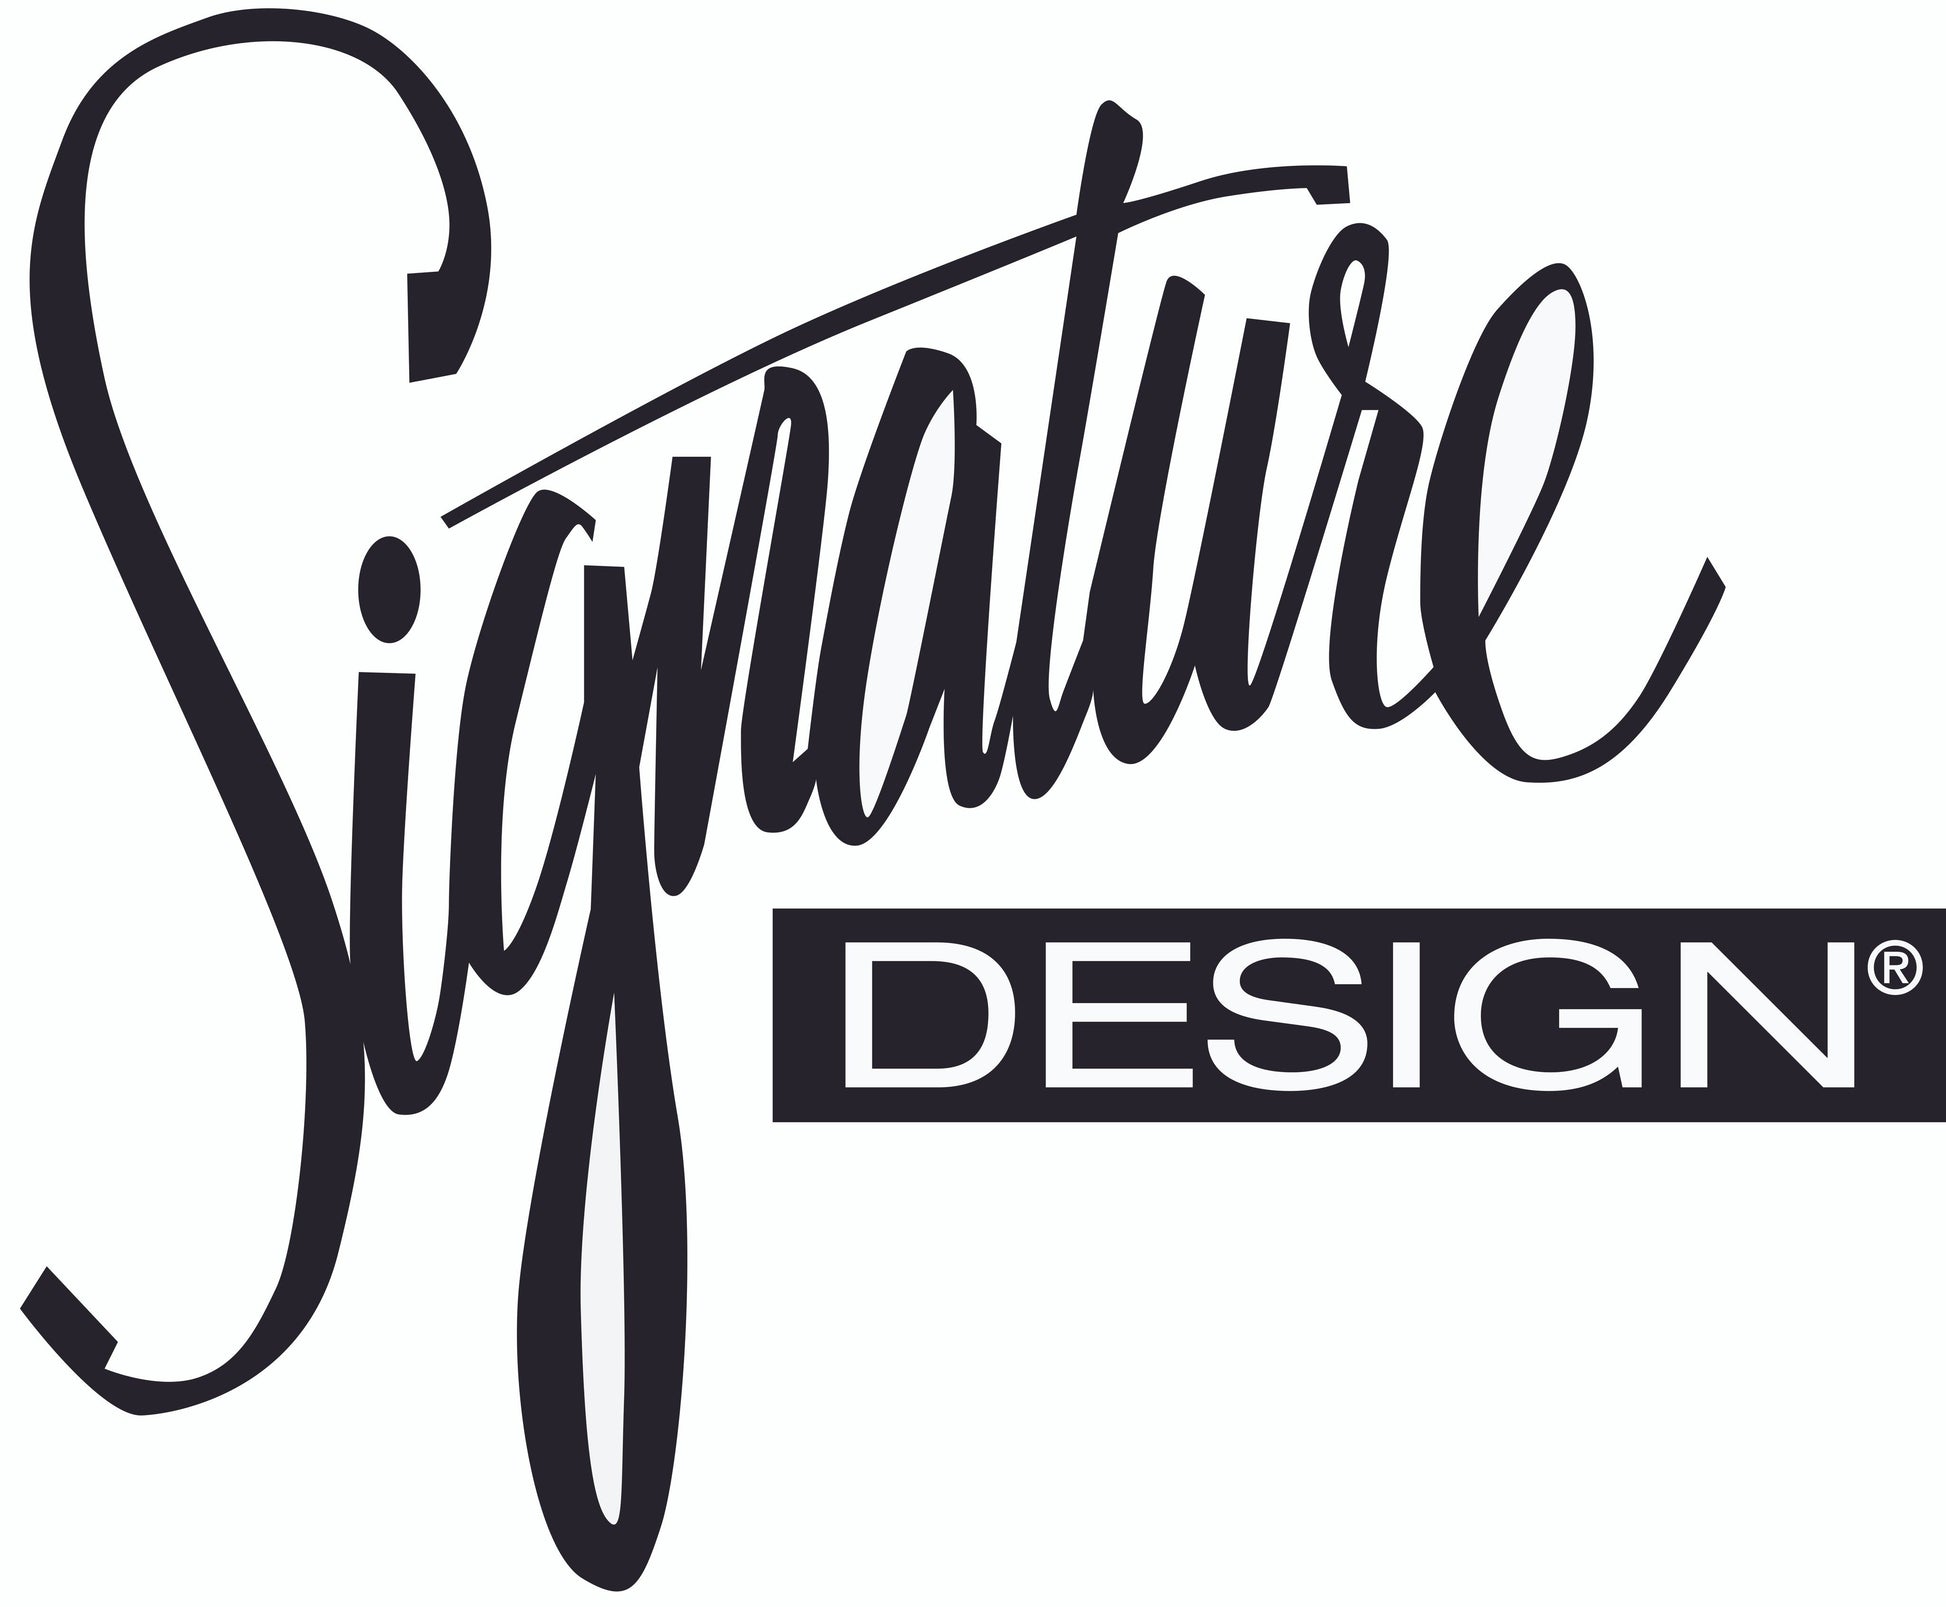 Charlang  Platform Bed Signature Design by Ashley®